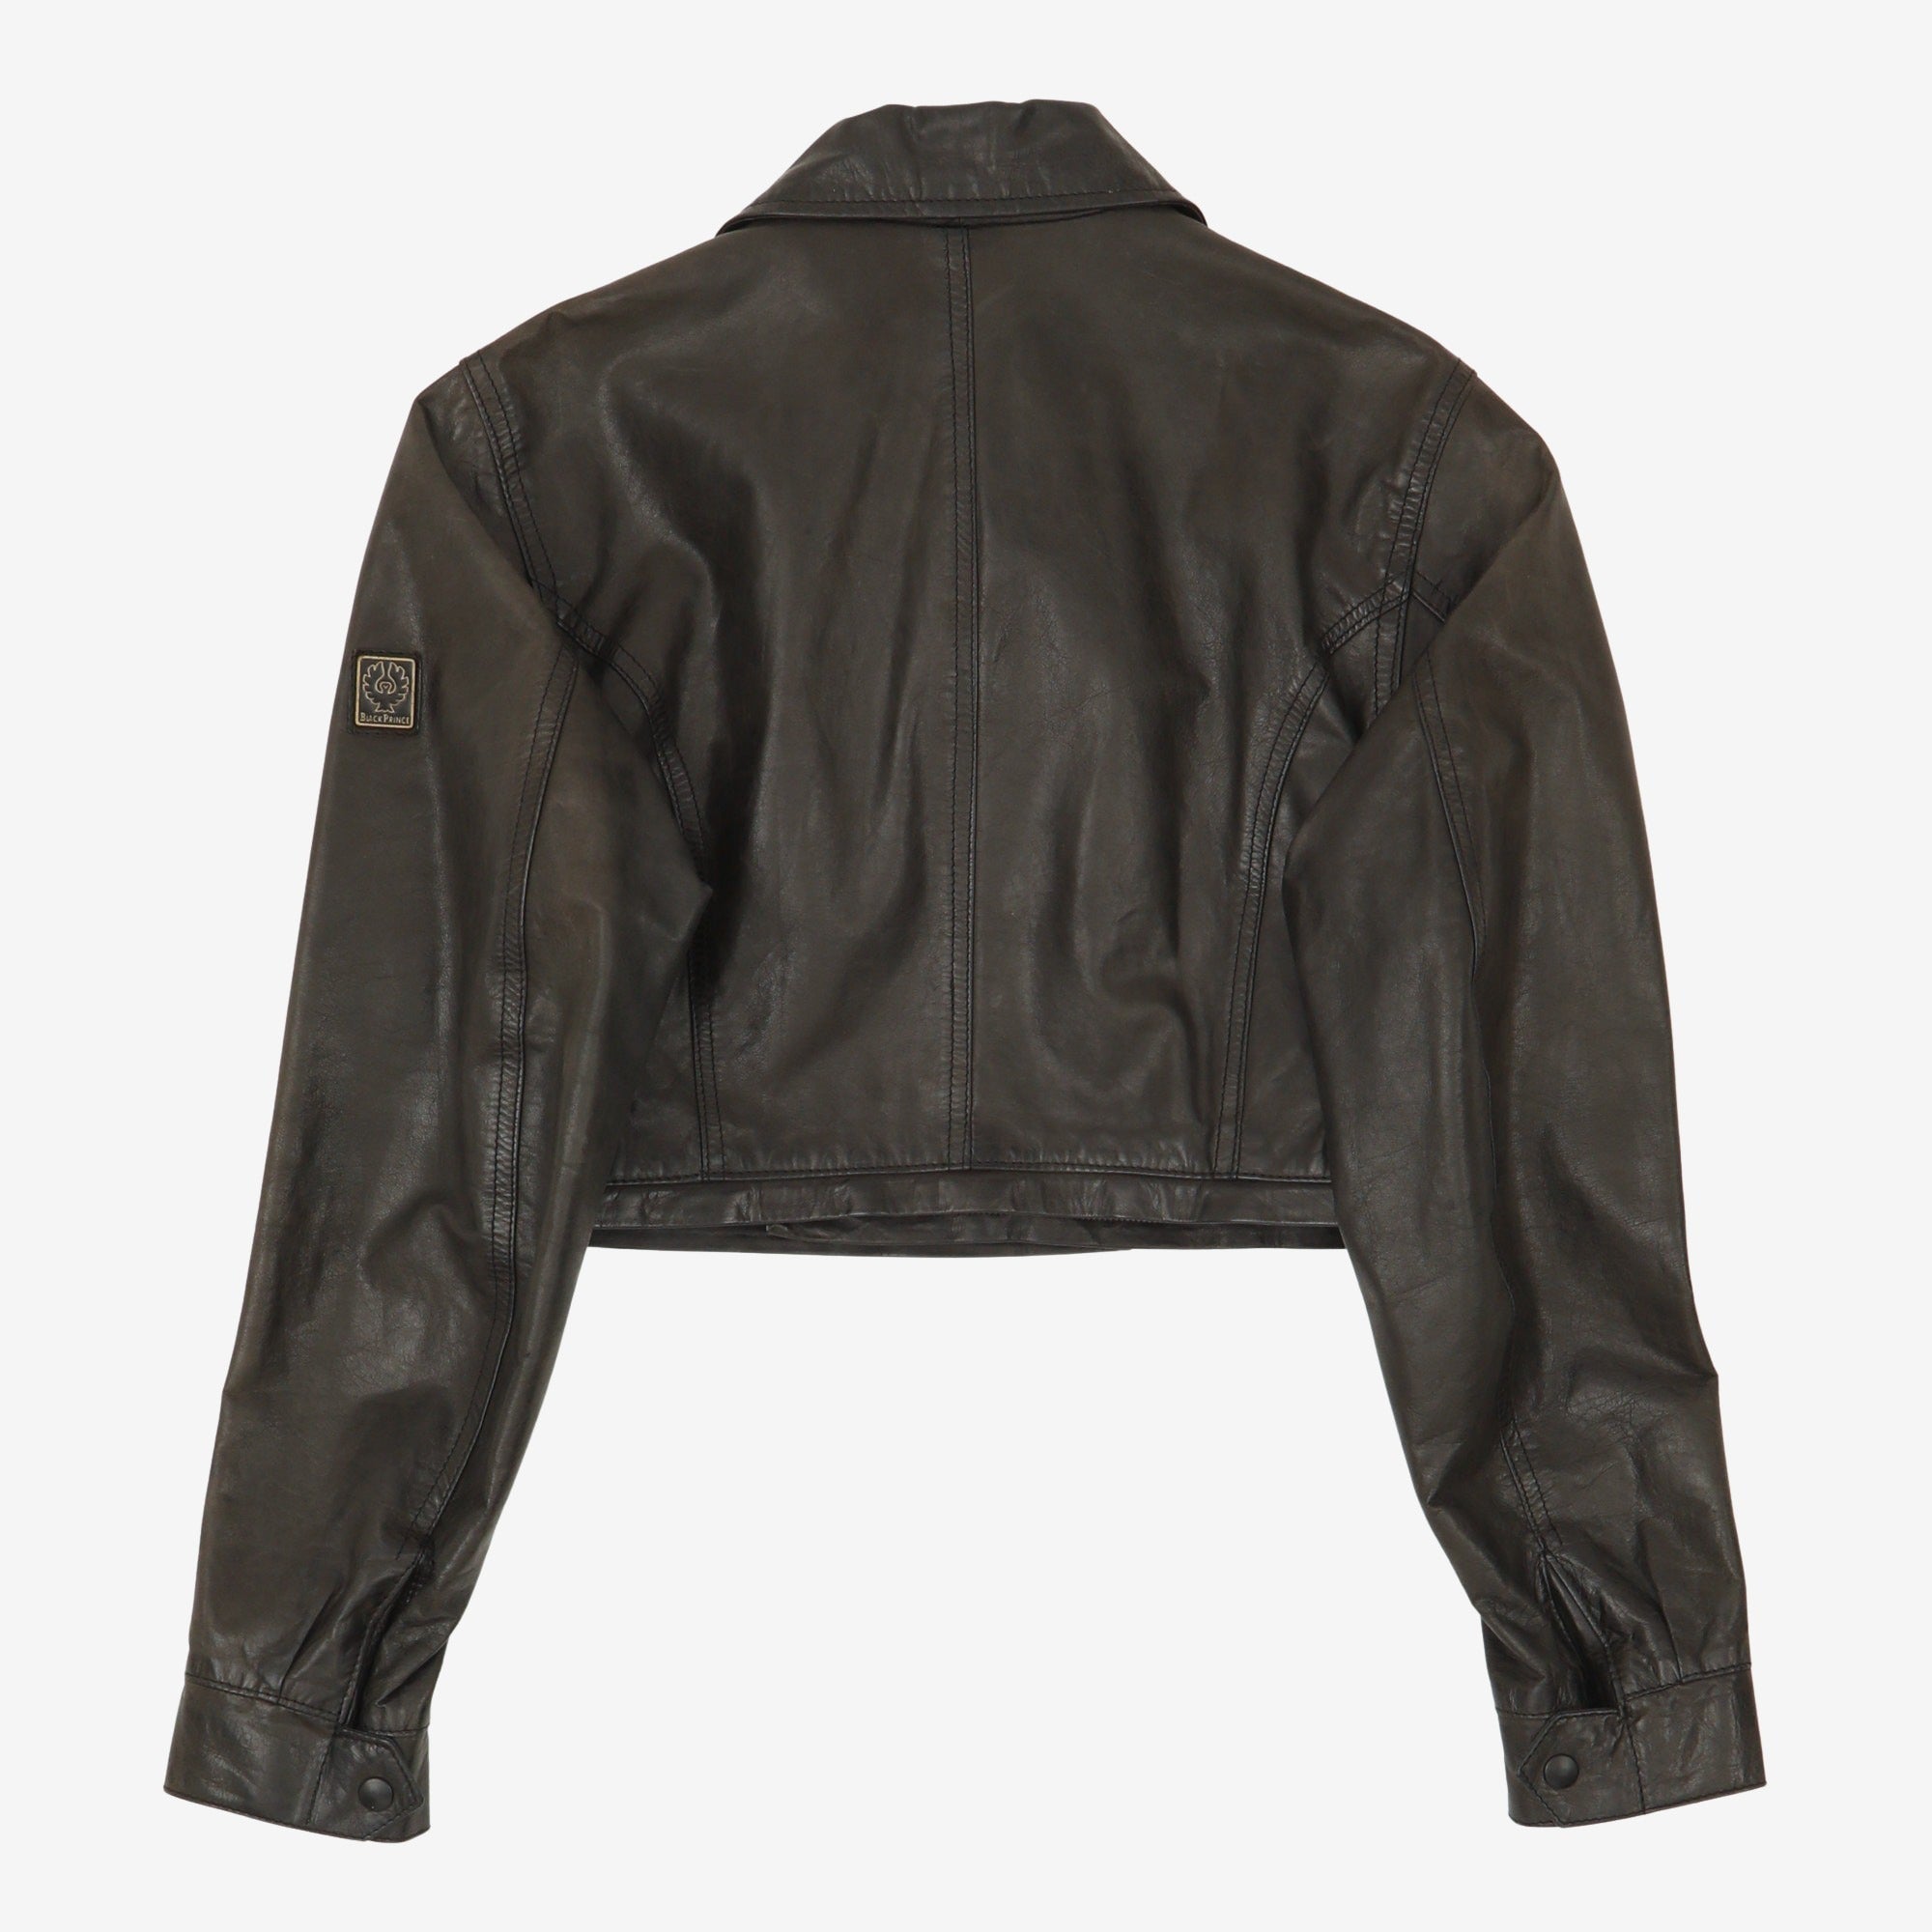 Black Prince Leather Jacket